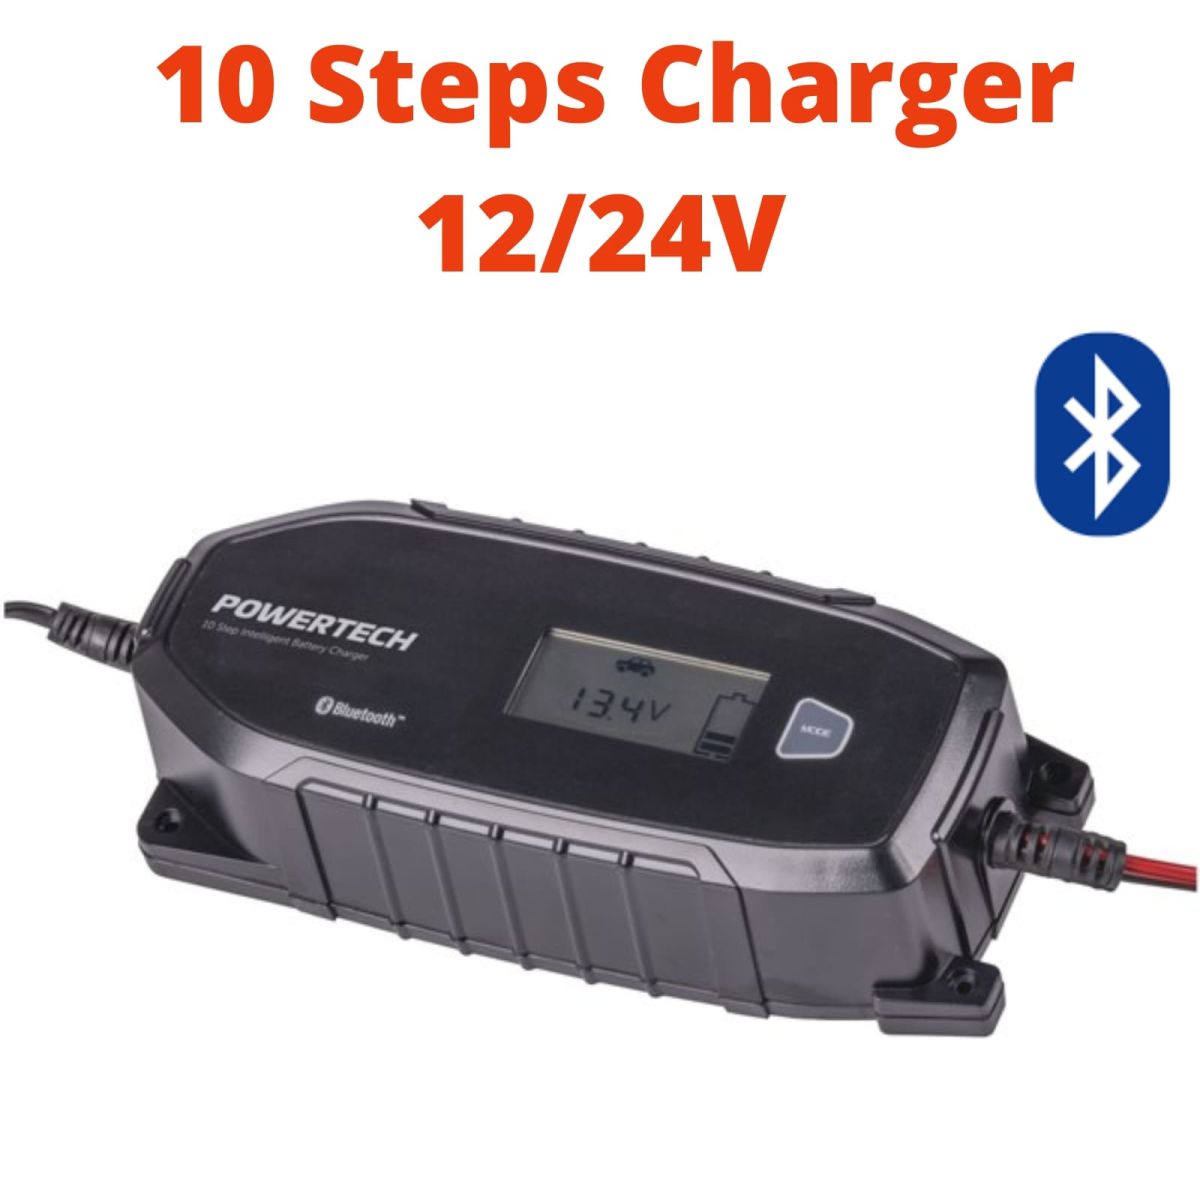 Smart battery charger, 10 Step Charger, 12V/24V Battery charger